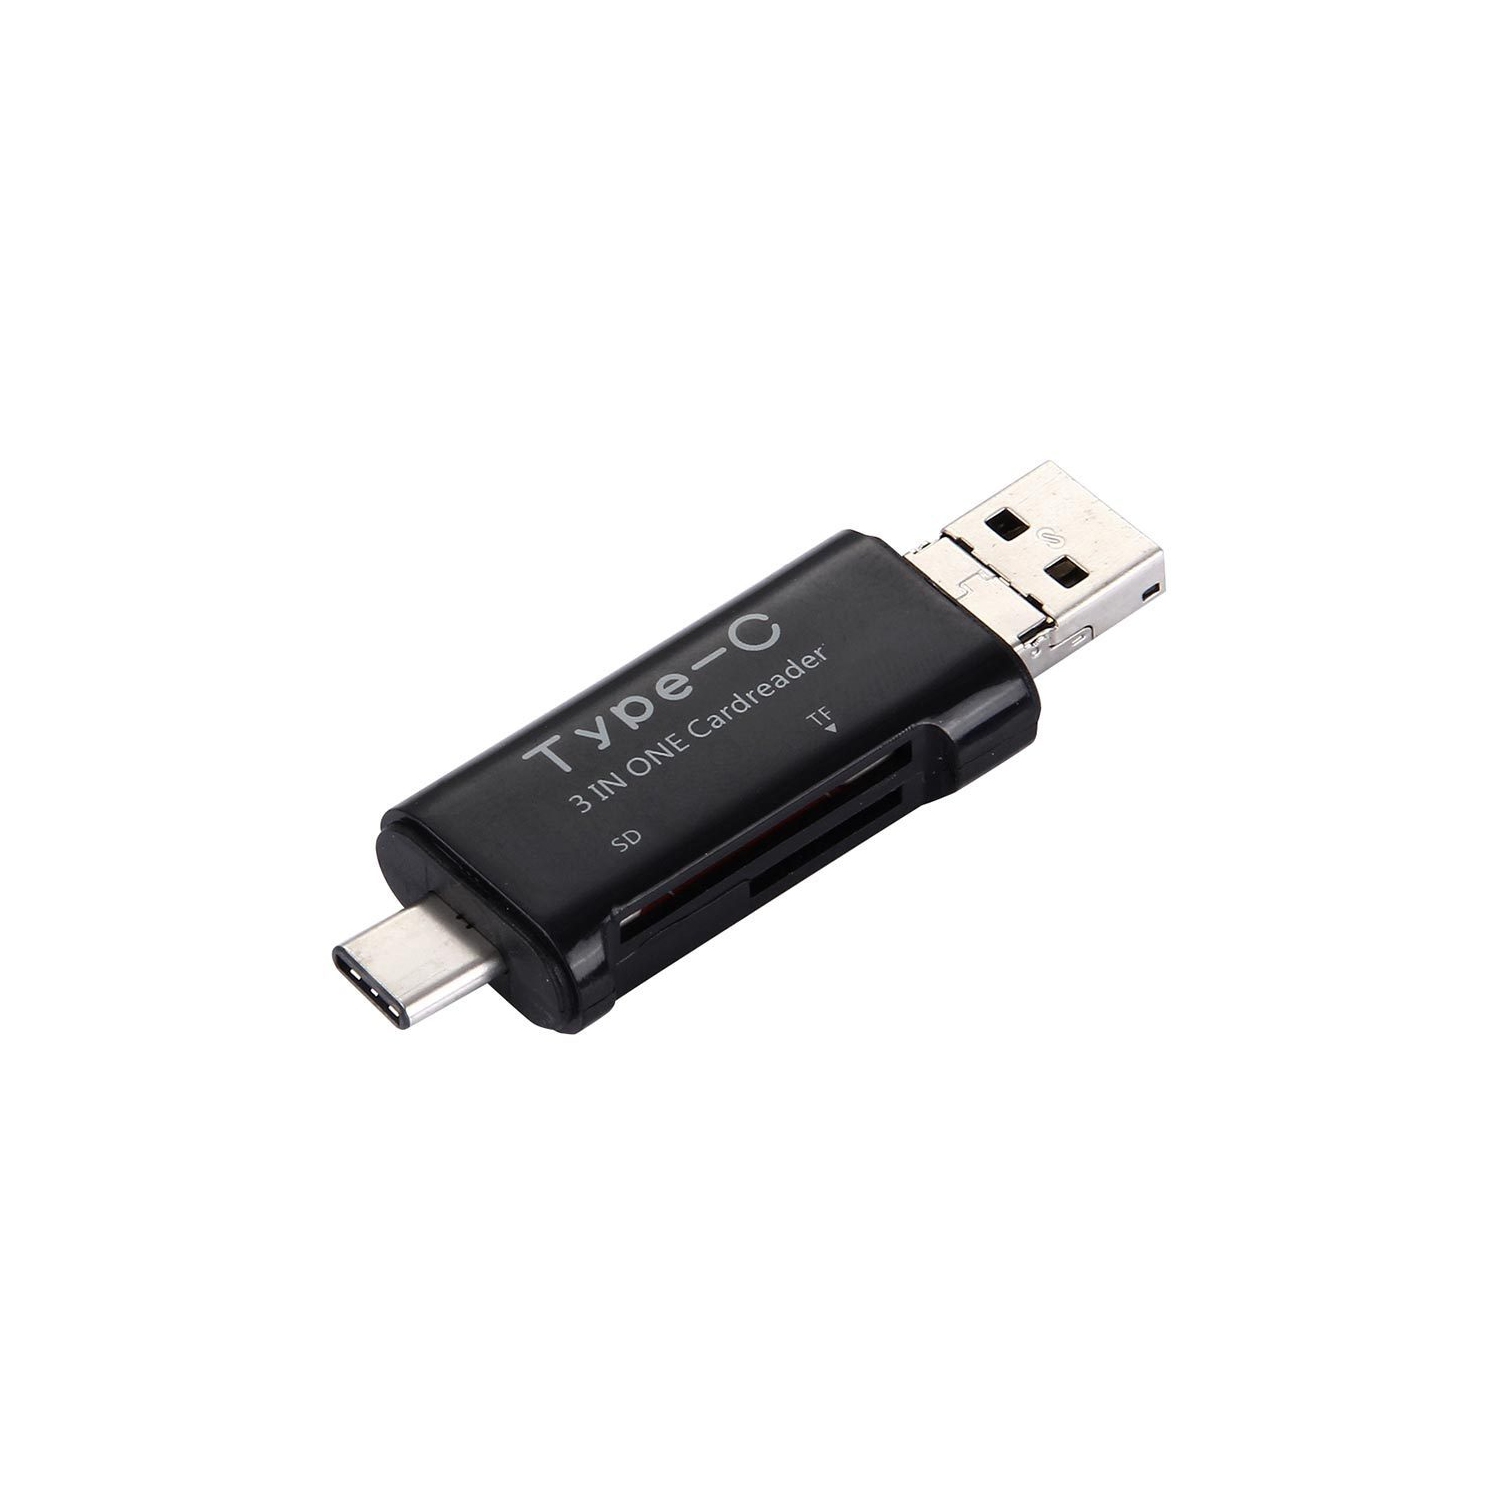 HYFAI 3 in 1 Card Reader USB Type C USB 3.1 + Micro USB + USB 2.0 SD TF Mini SD Card Reader Combo OTG Adapter